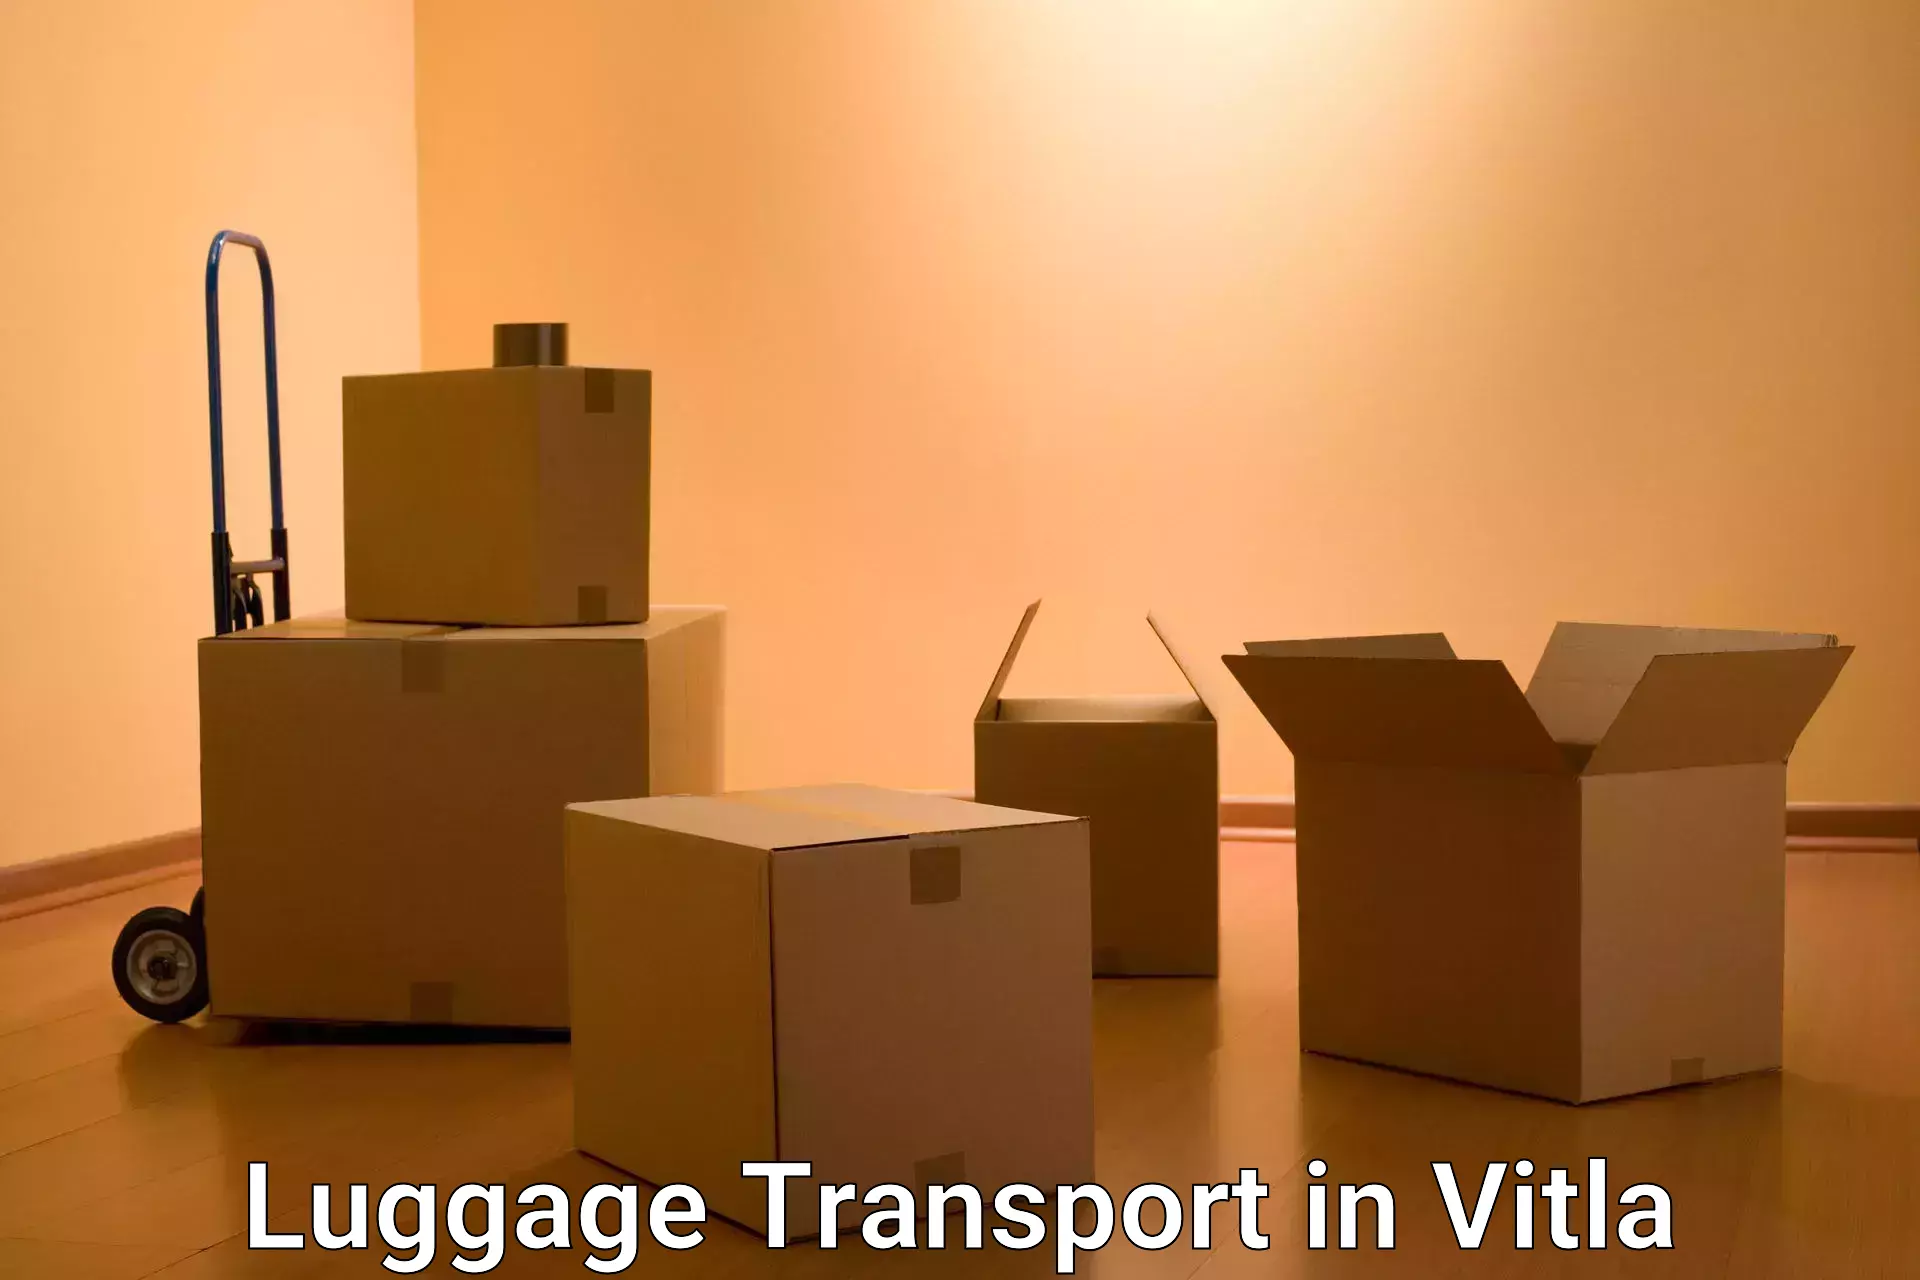 Business luggage transport in Vitla